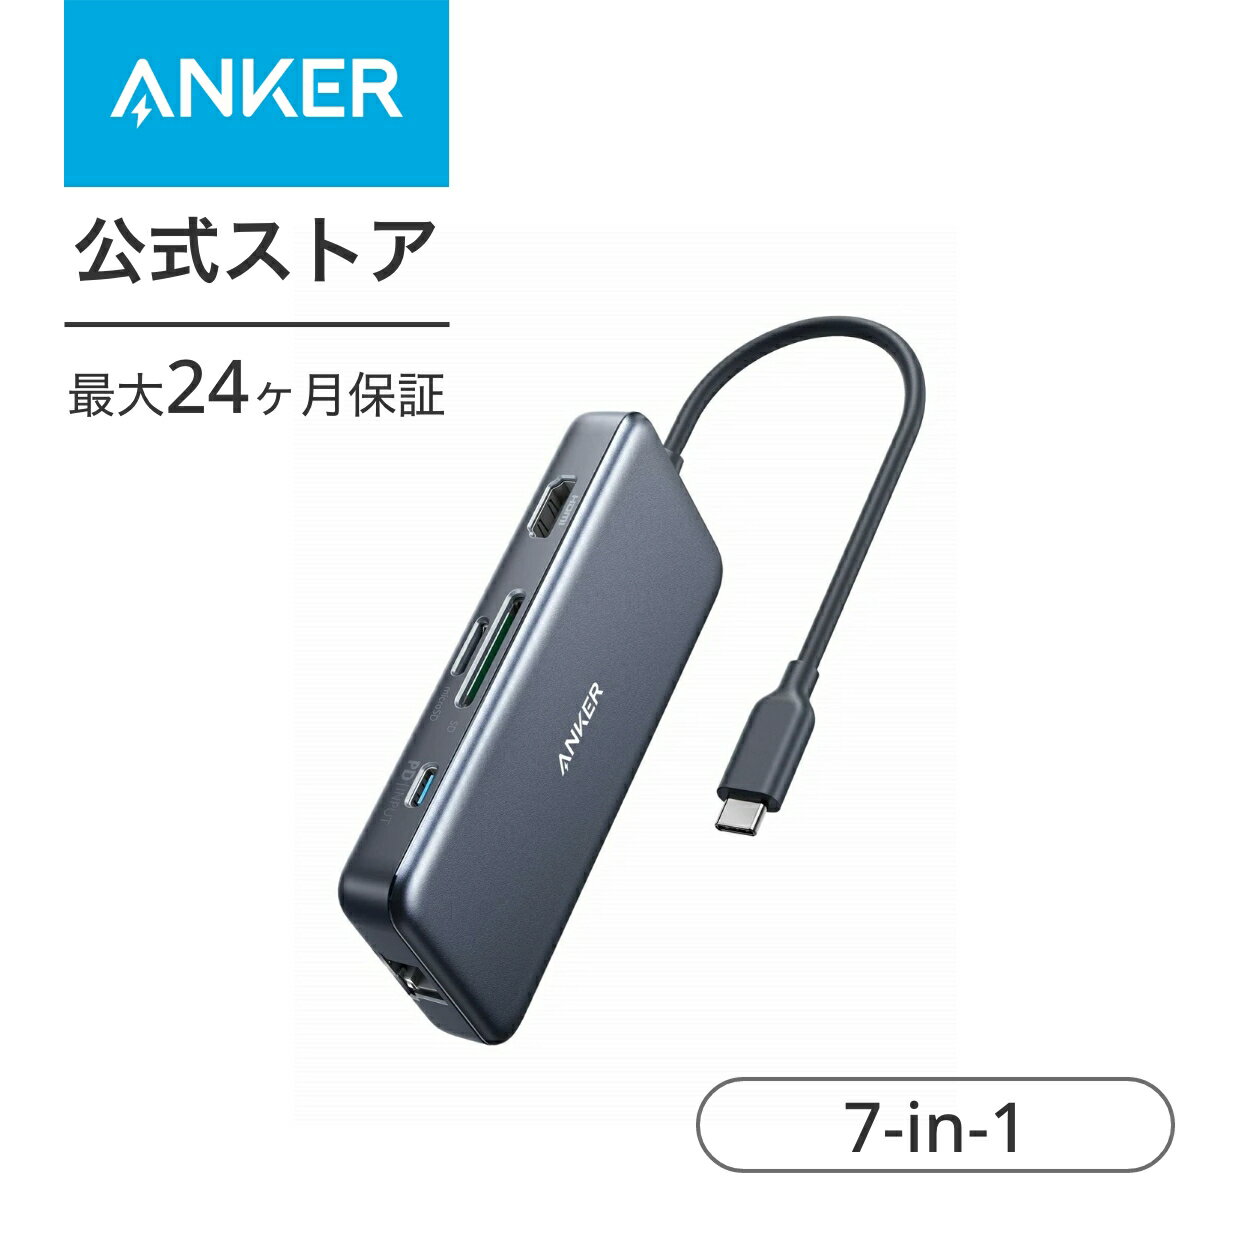 Anker PowerExpand+ 7-in-1 USB-C PD イーサネット ハブ4K対応HDMI出力ポート 60W出力 Power Delivery 対応USB-Cポート 1Gbps イーサネット 2つの USB-A ポート microSD & SDカード スロット搭…